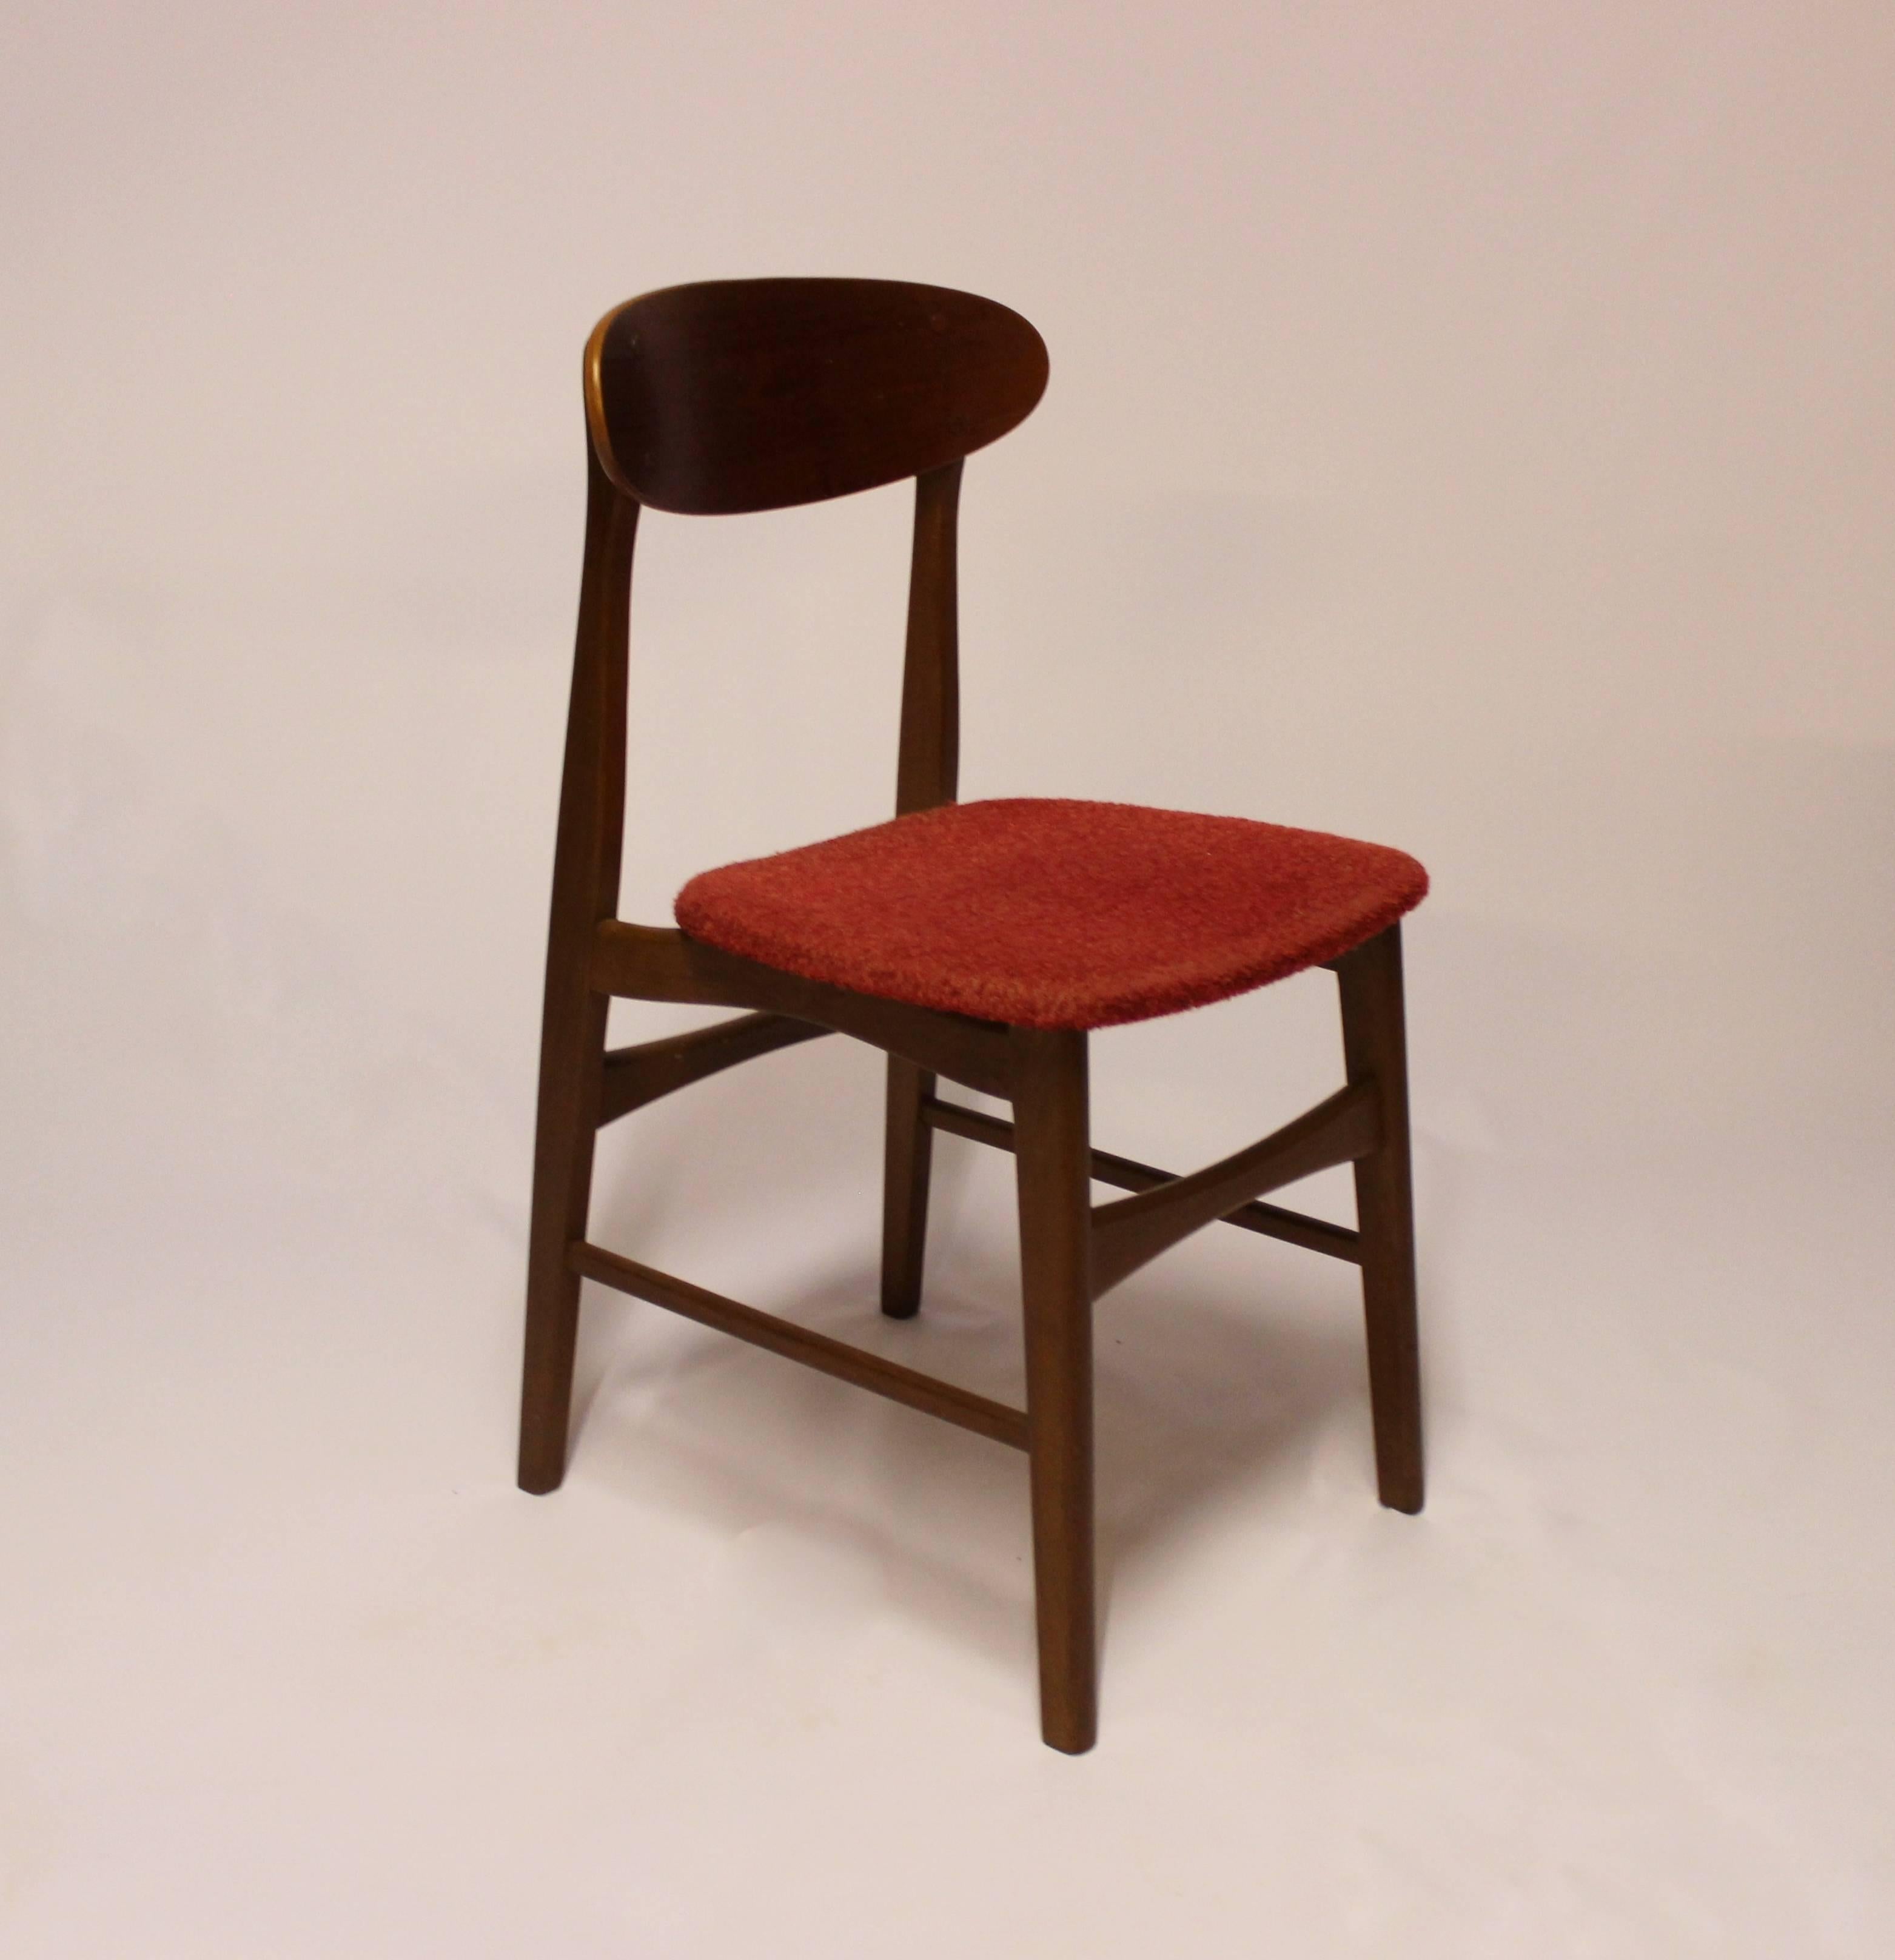 Scandinavian Modern Set of Four Dining Room Chairs in Teak, of Danish Design, 1960s